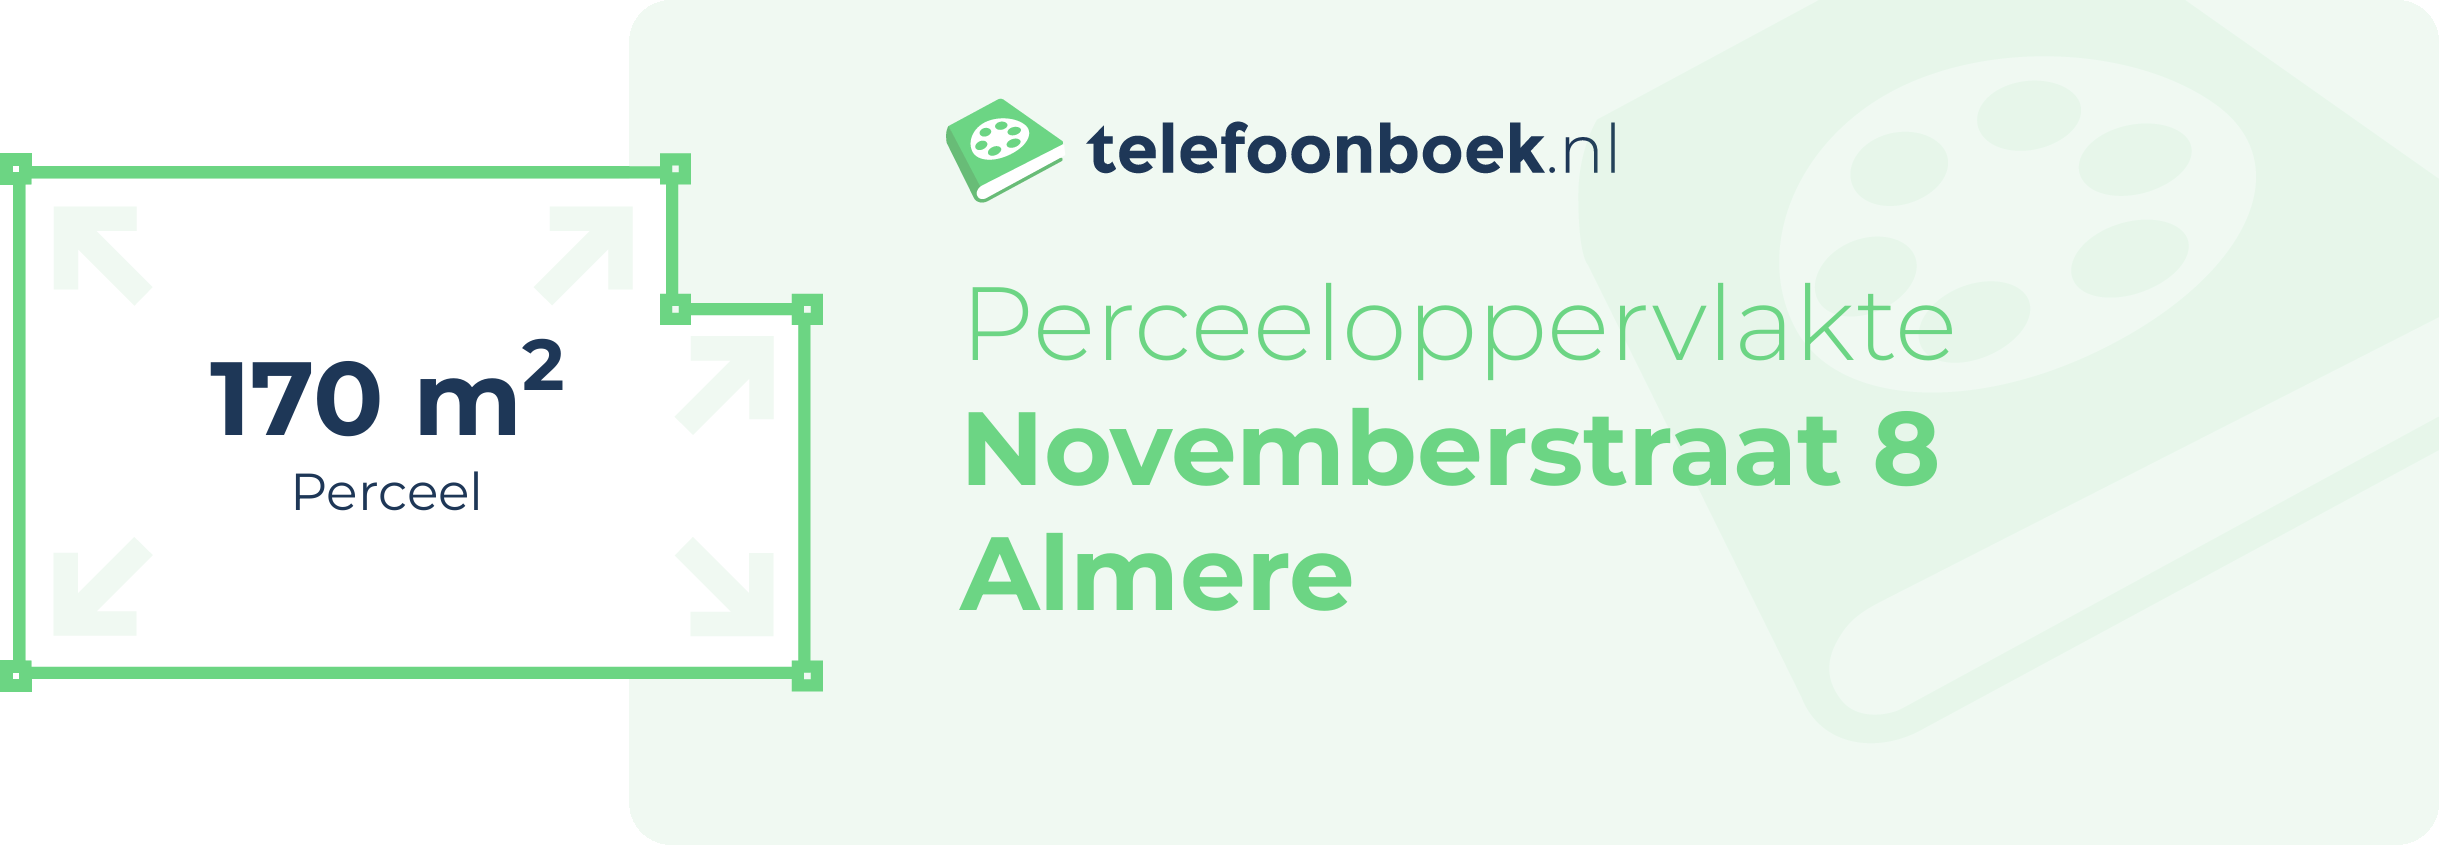 Perceeloppervlakte Novemberstraat 8 Almere